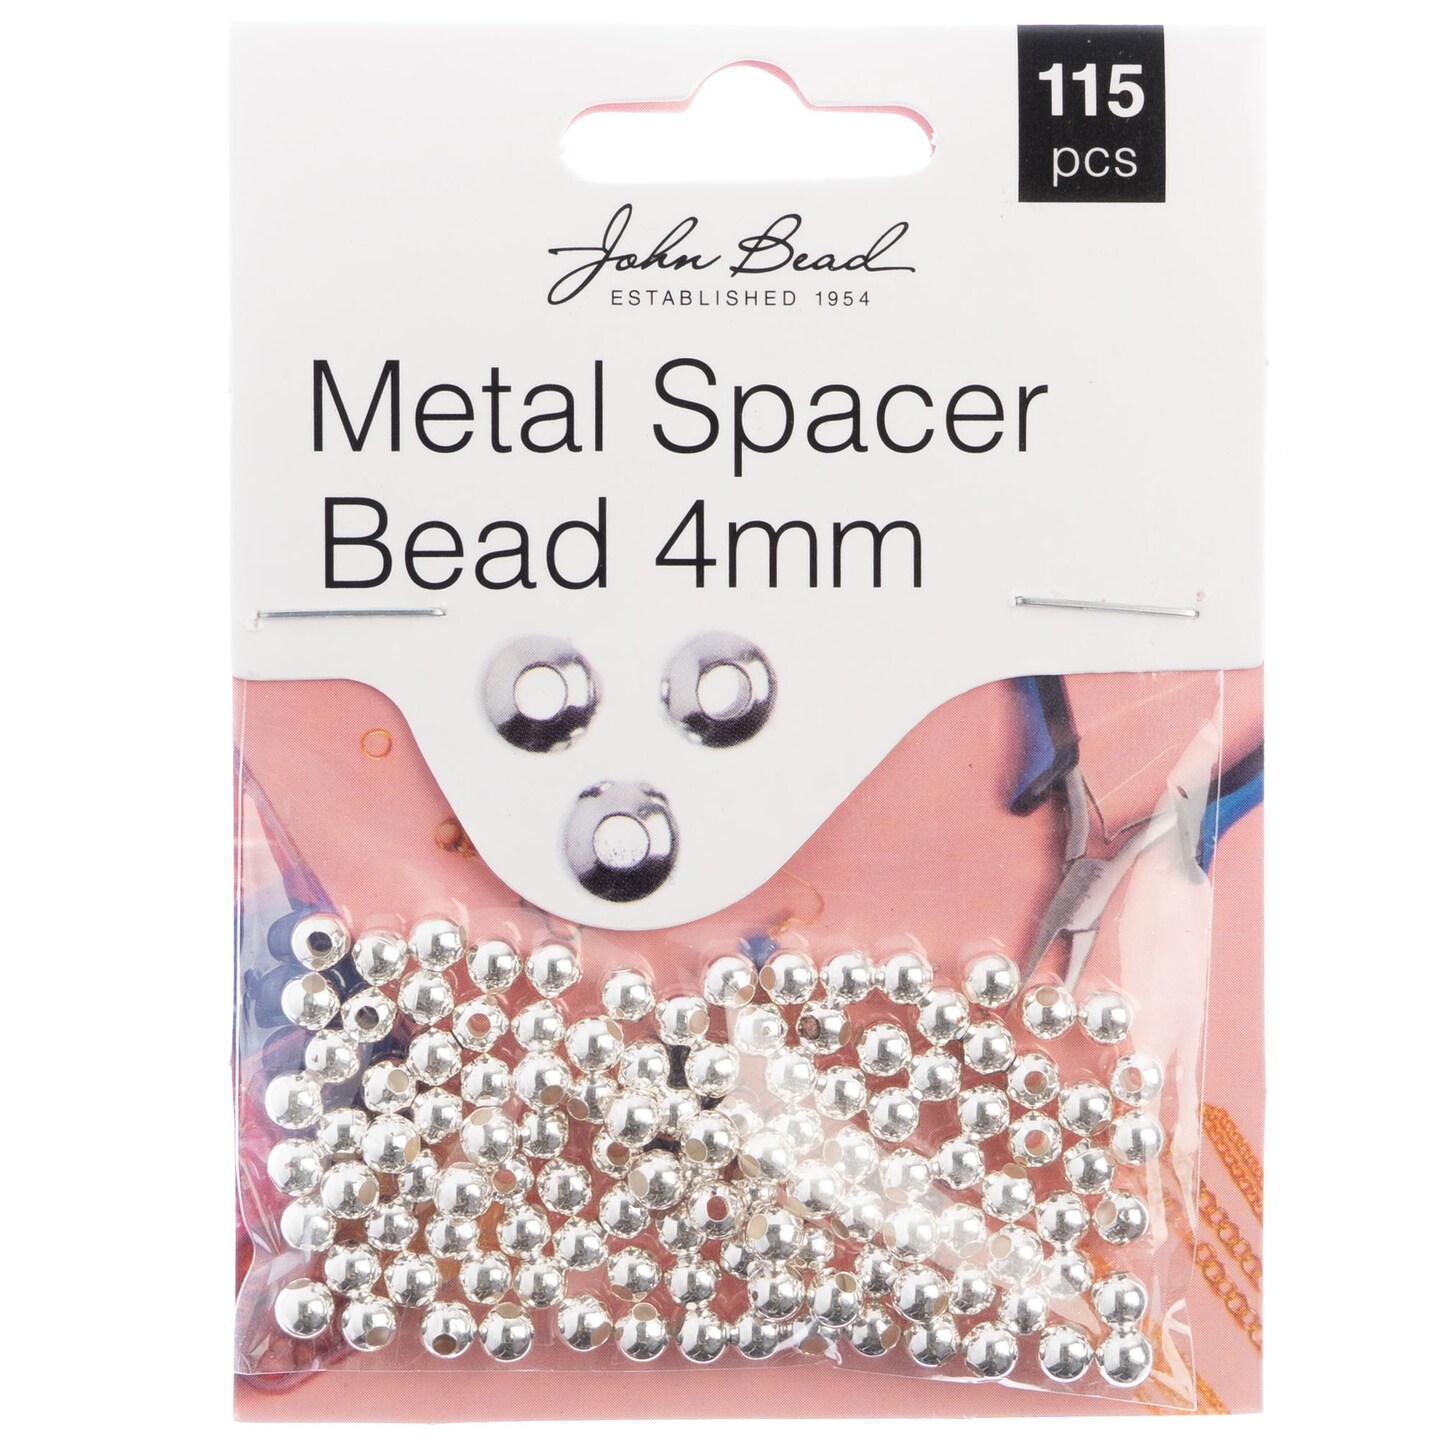 John Bead Metal Spacer Bead 4mm 115/Pkg-Silver